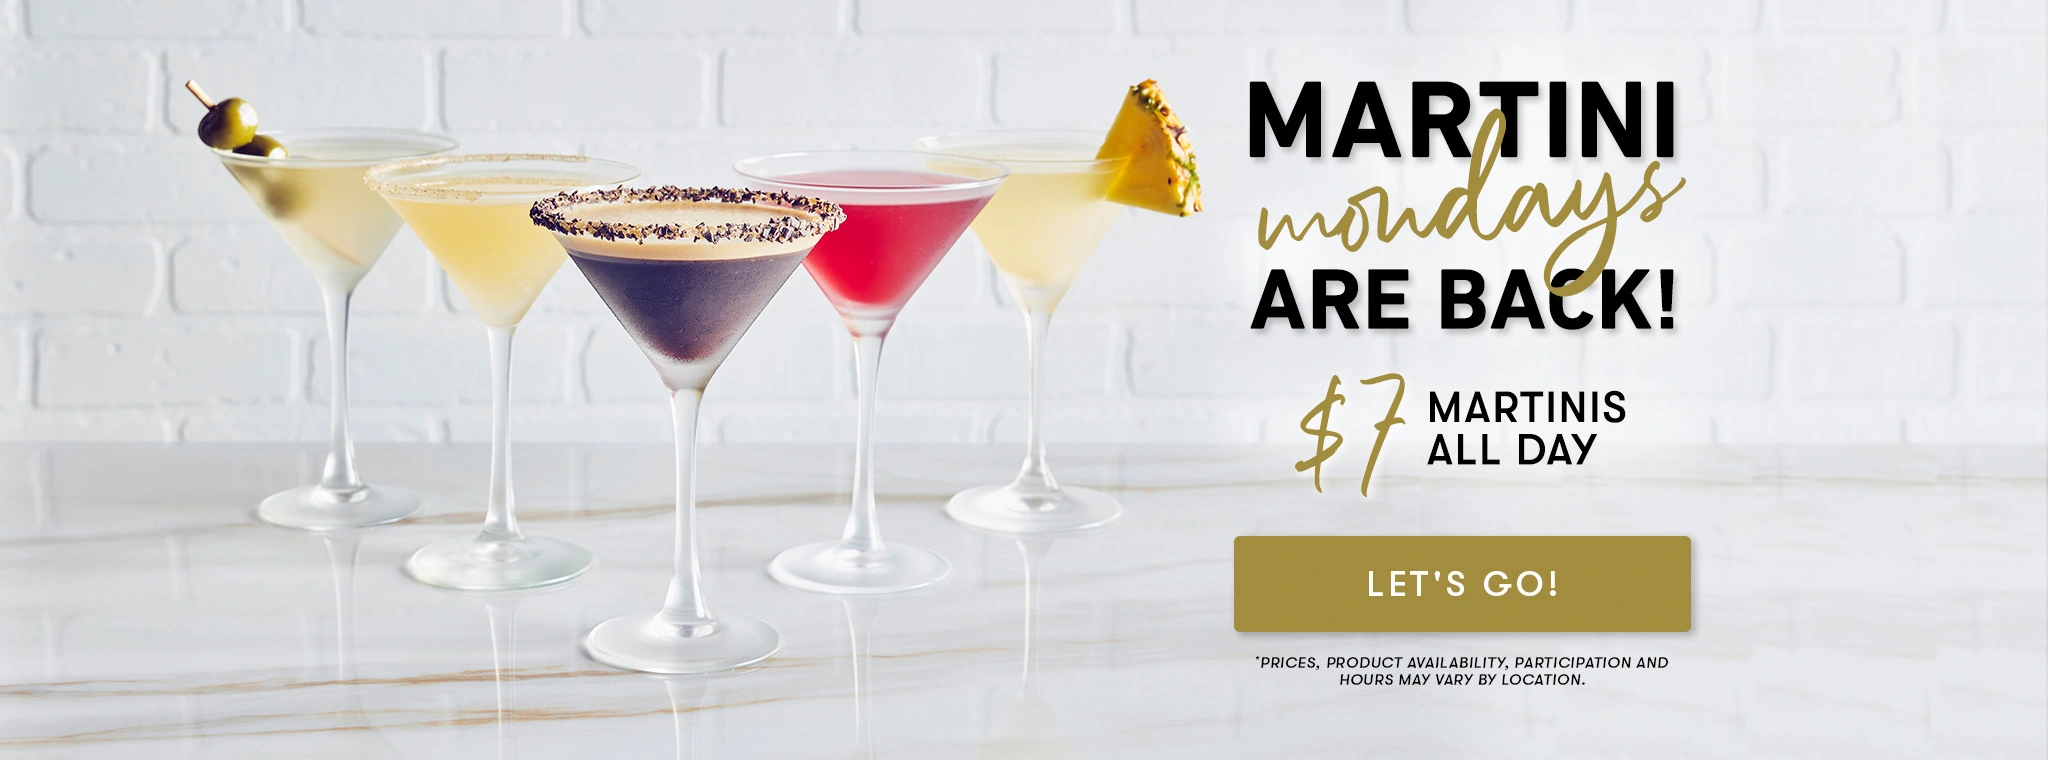 martini mondays are back banner